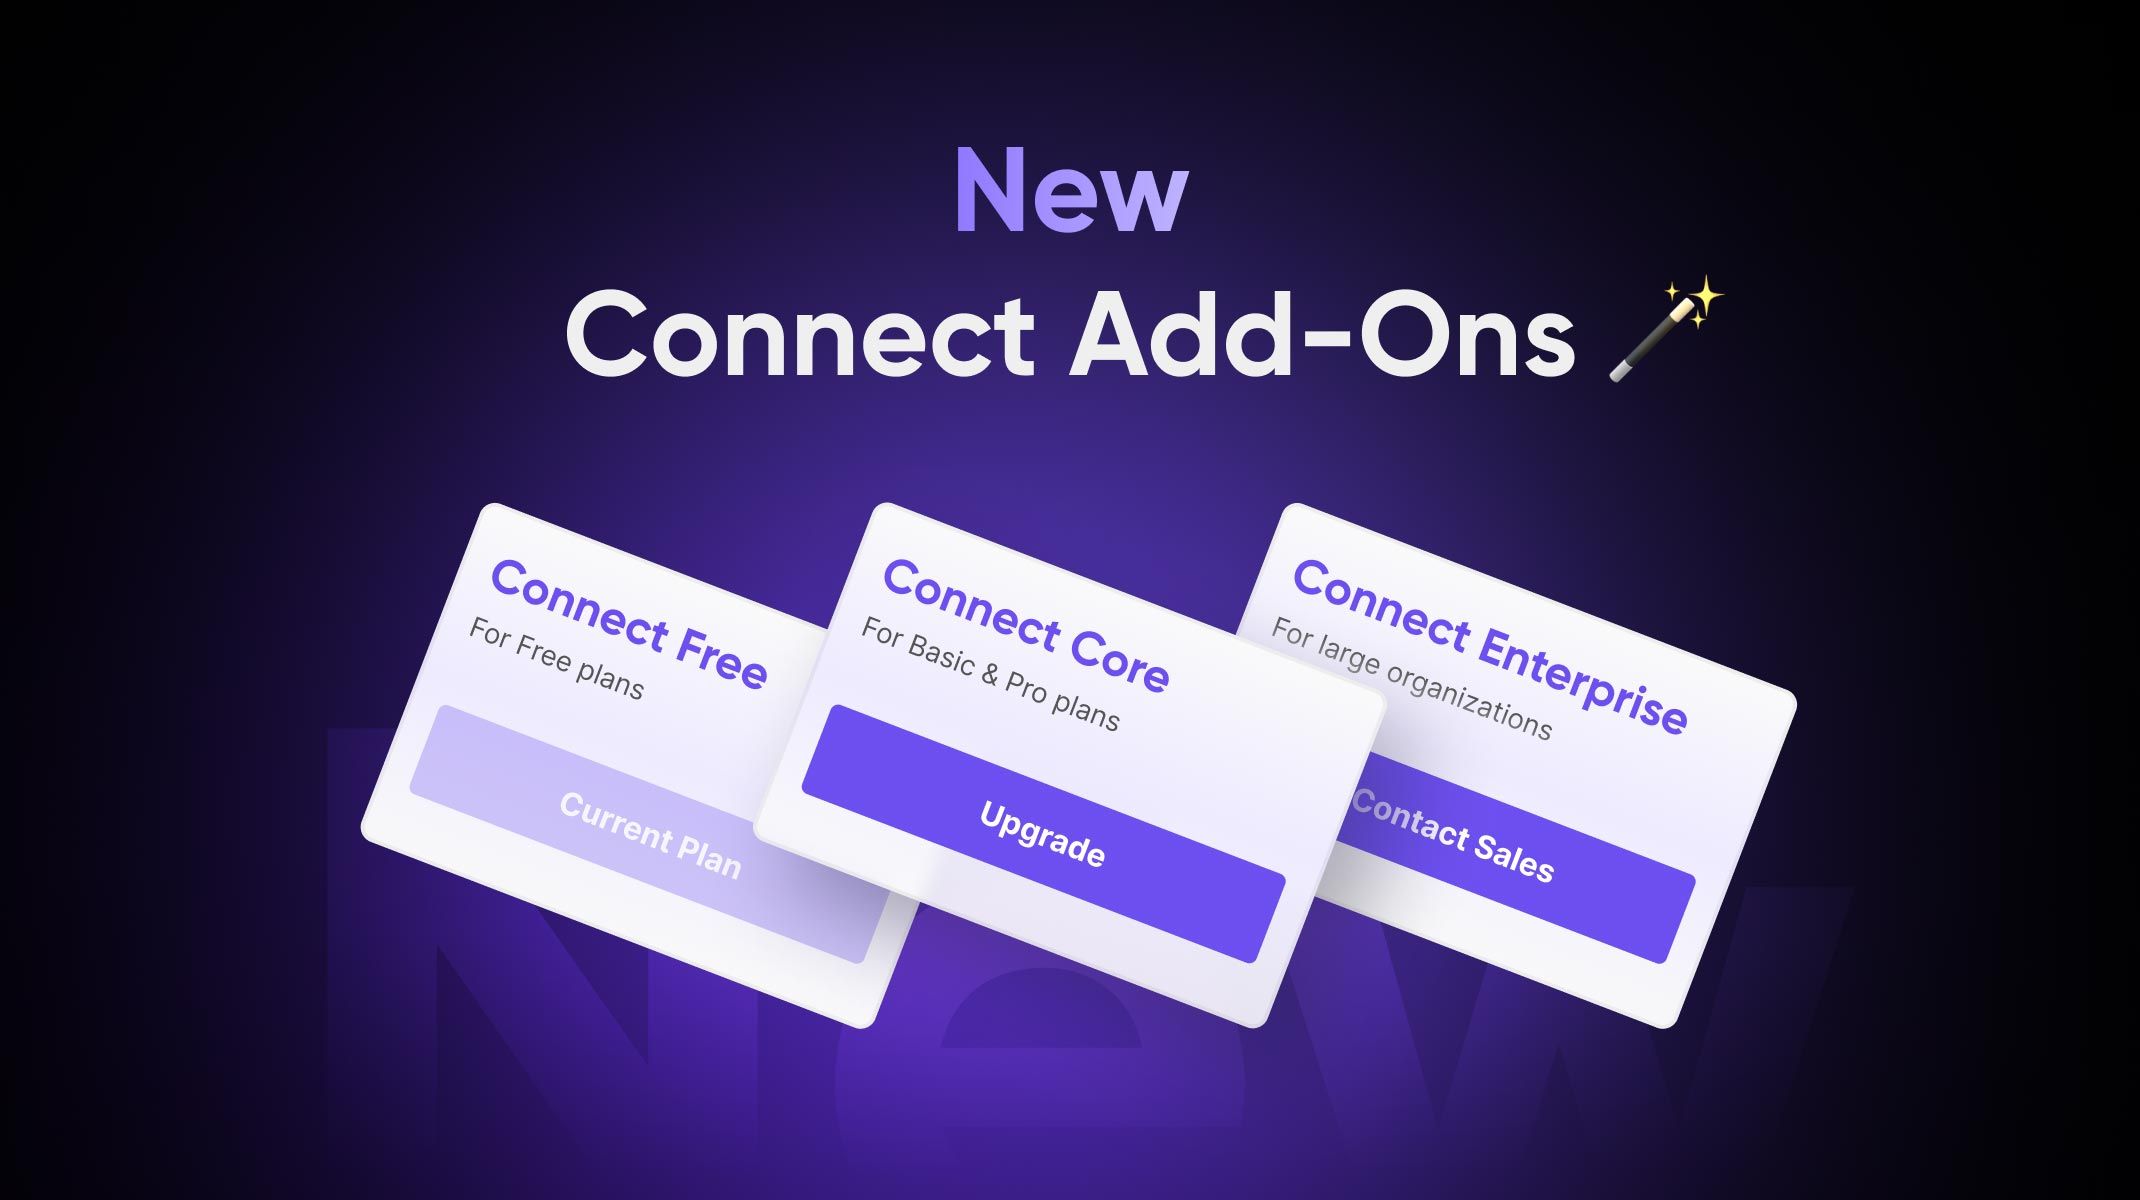 new connect tiers: connect free, connect core, connect enterprise